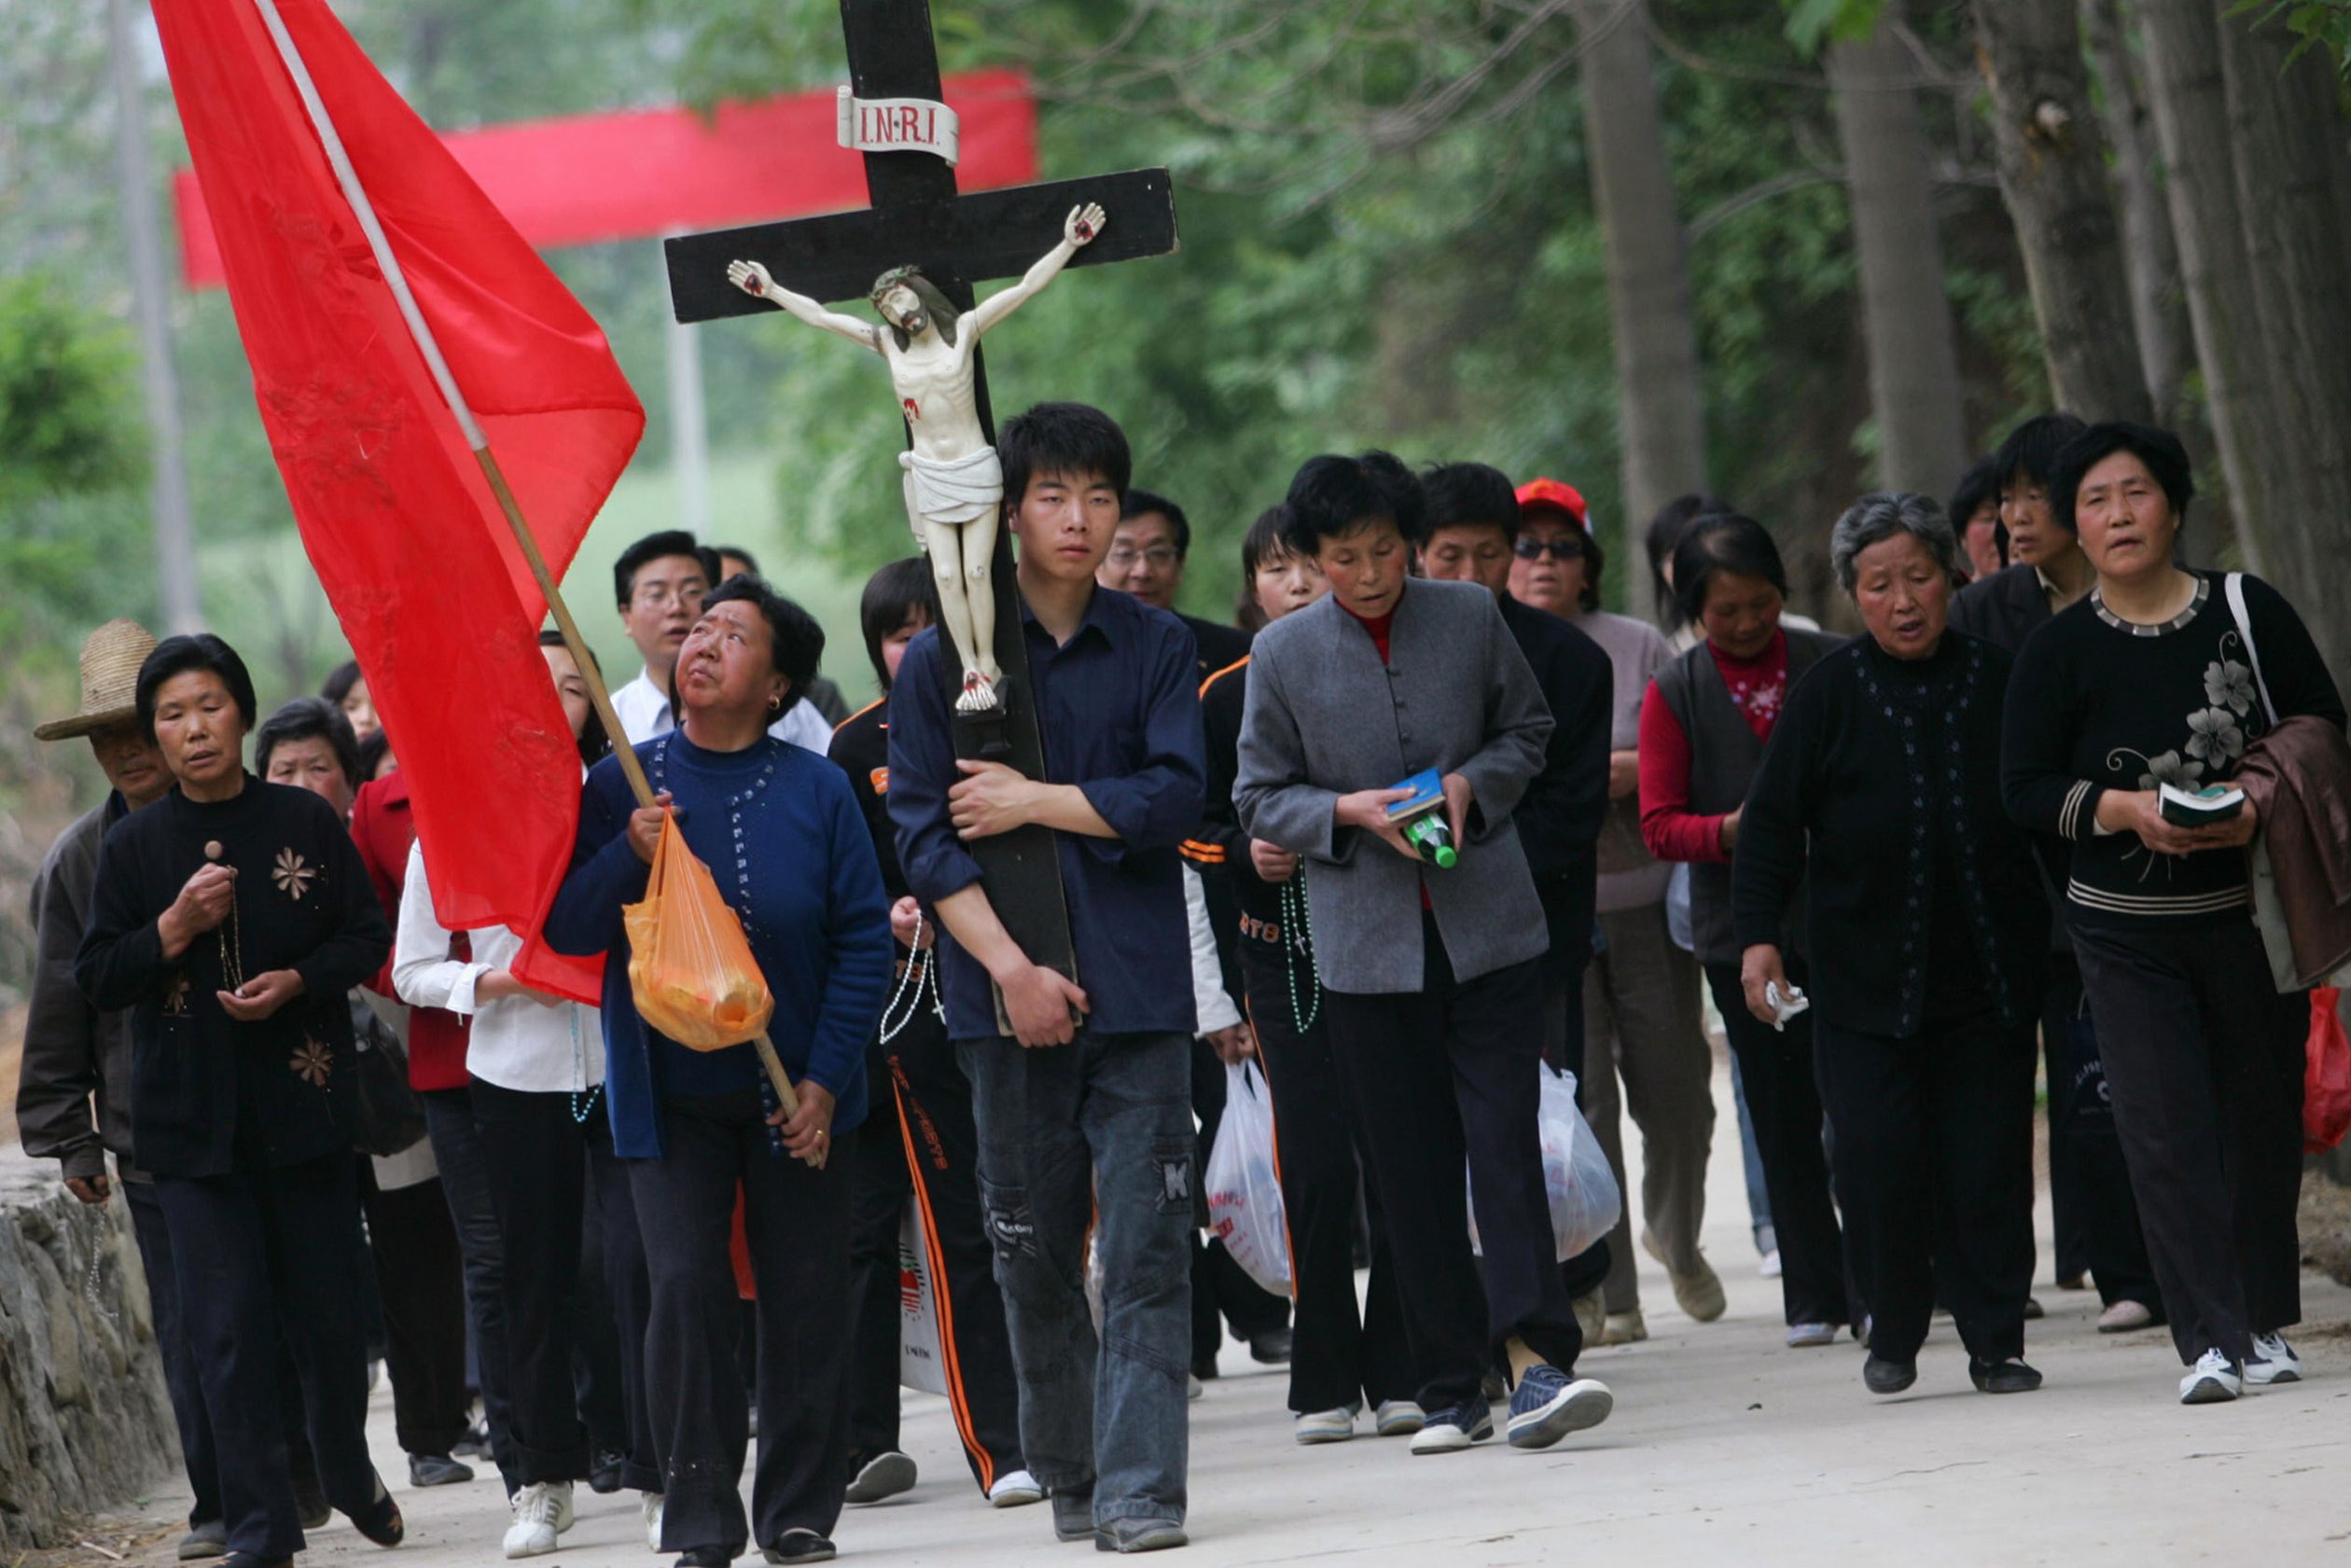 Breve história do cristianismo na China